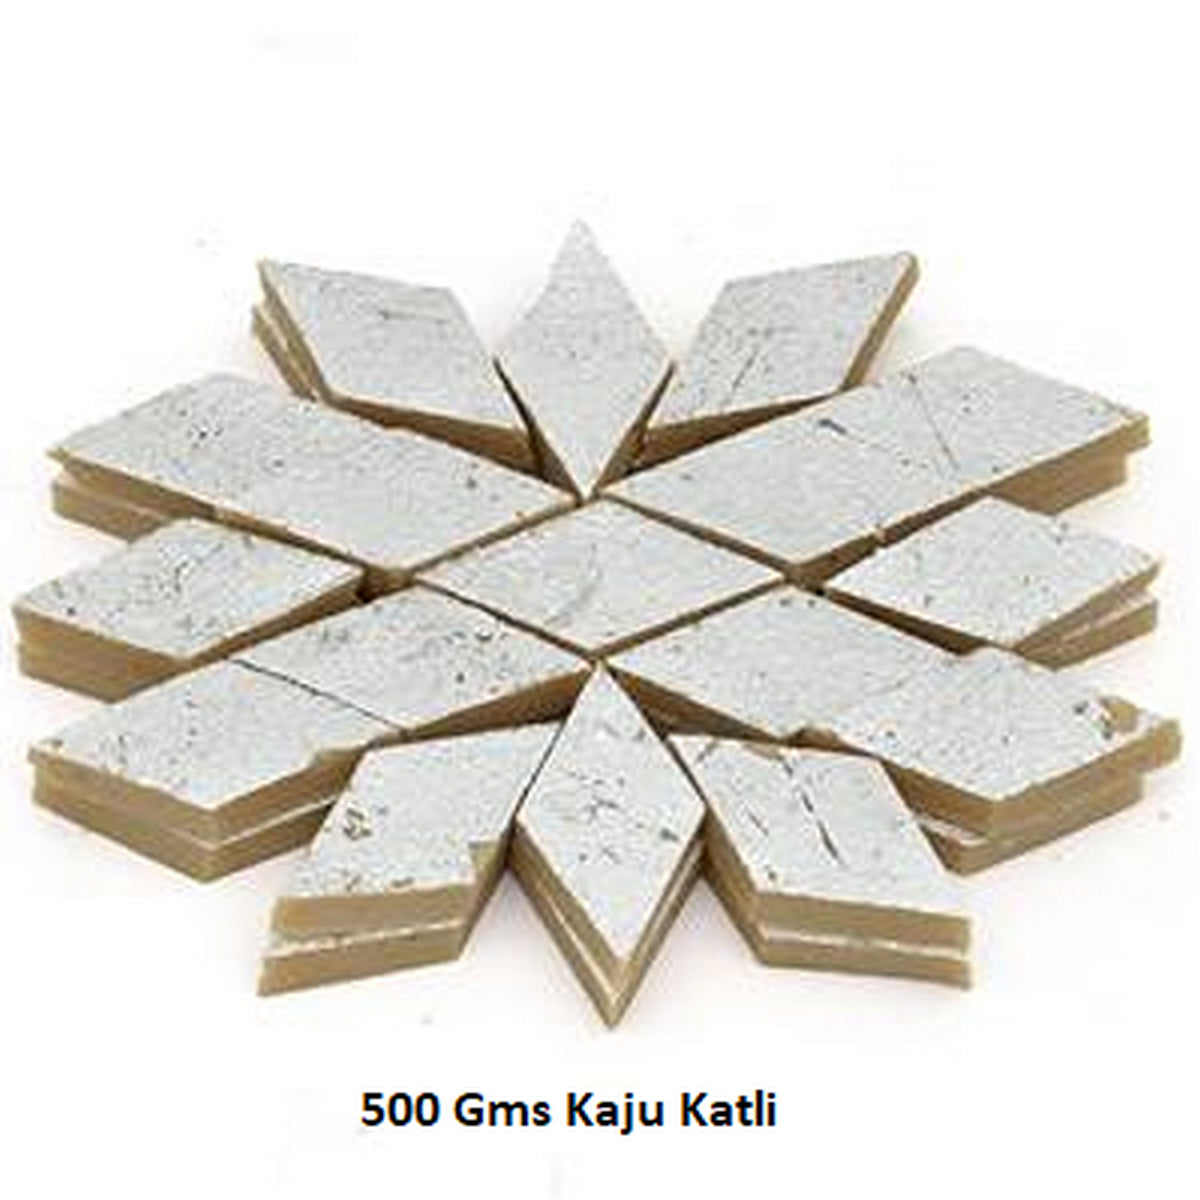 Designer Rakhi with Kaju Katli (500 Gm) and Roli Chawal Pack, Best Wishes Greeting Card 2